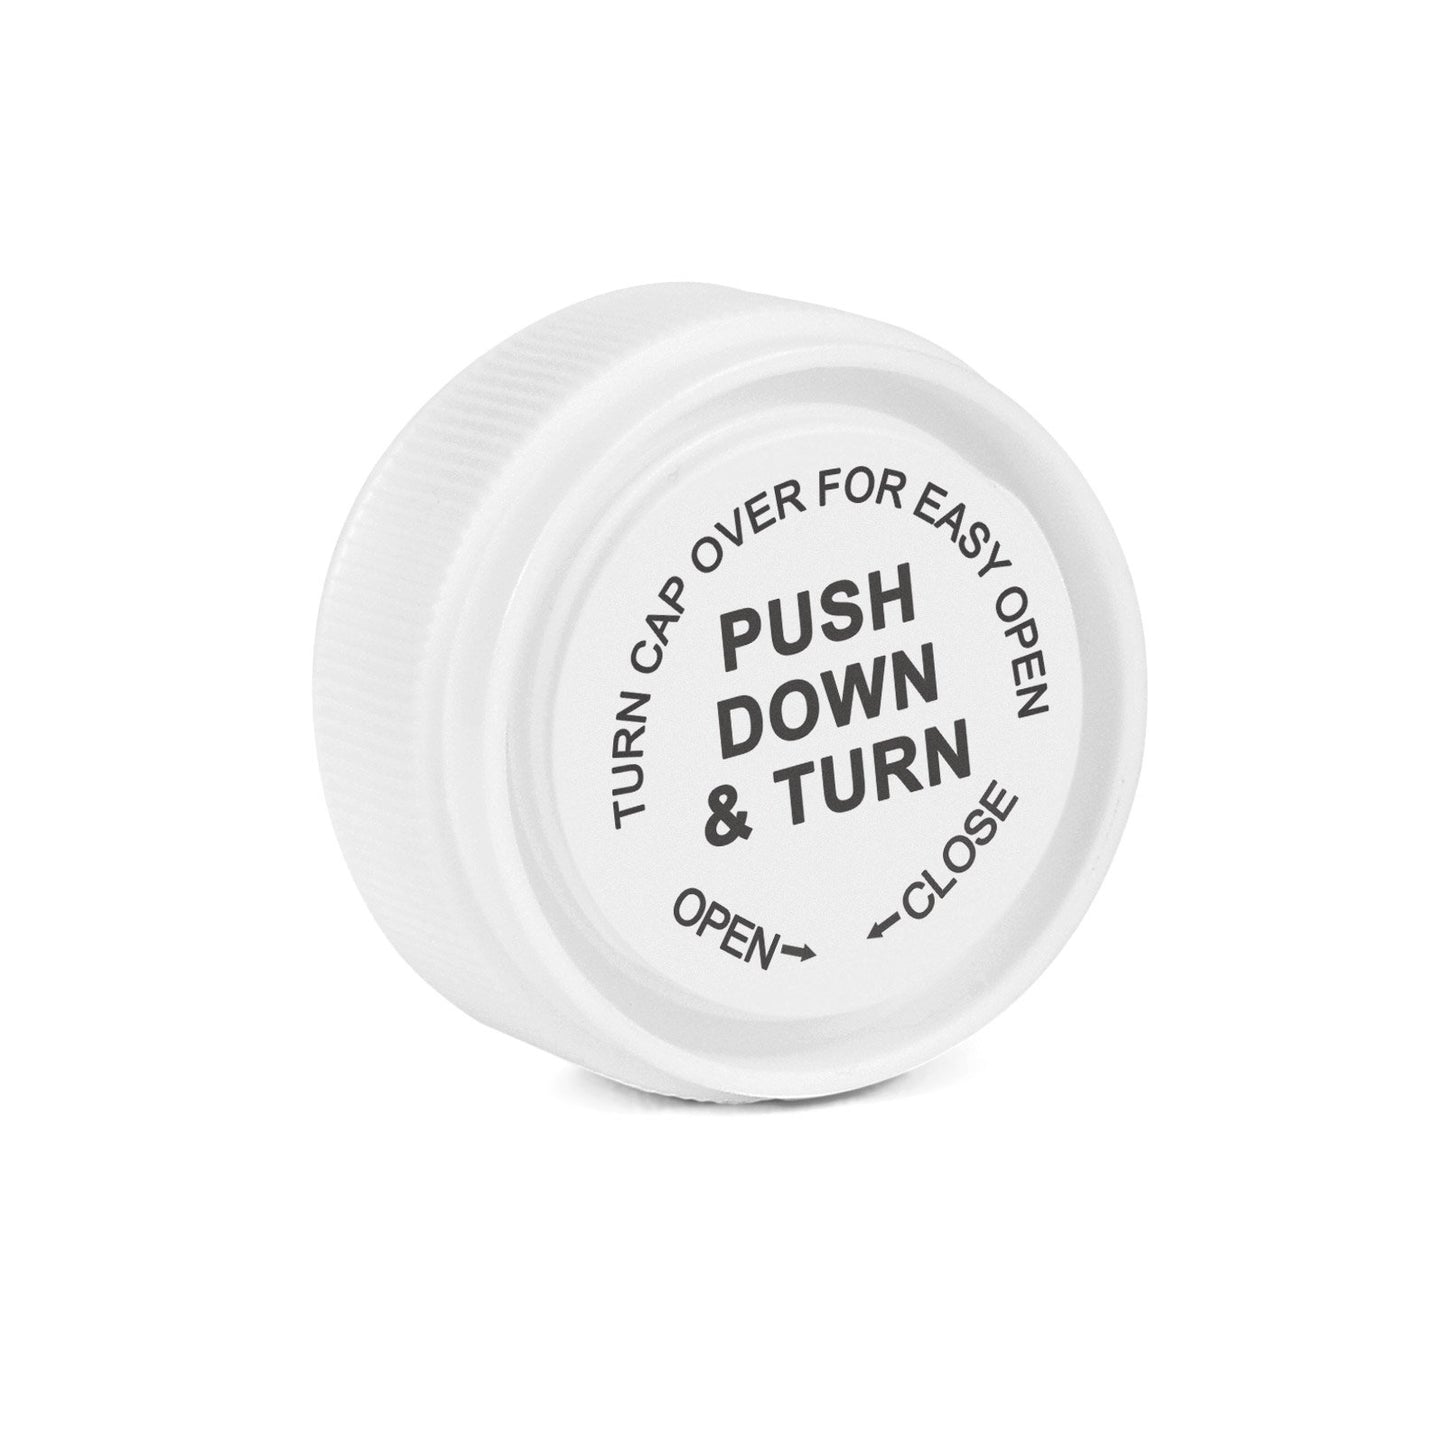 20 Dram Push Down & Turn Cap Opaque White - 240 COUNT